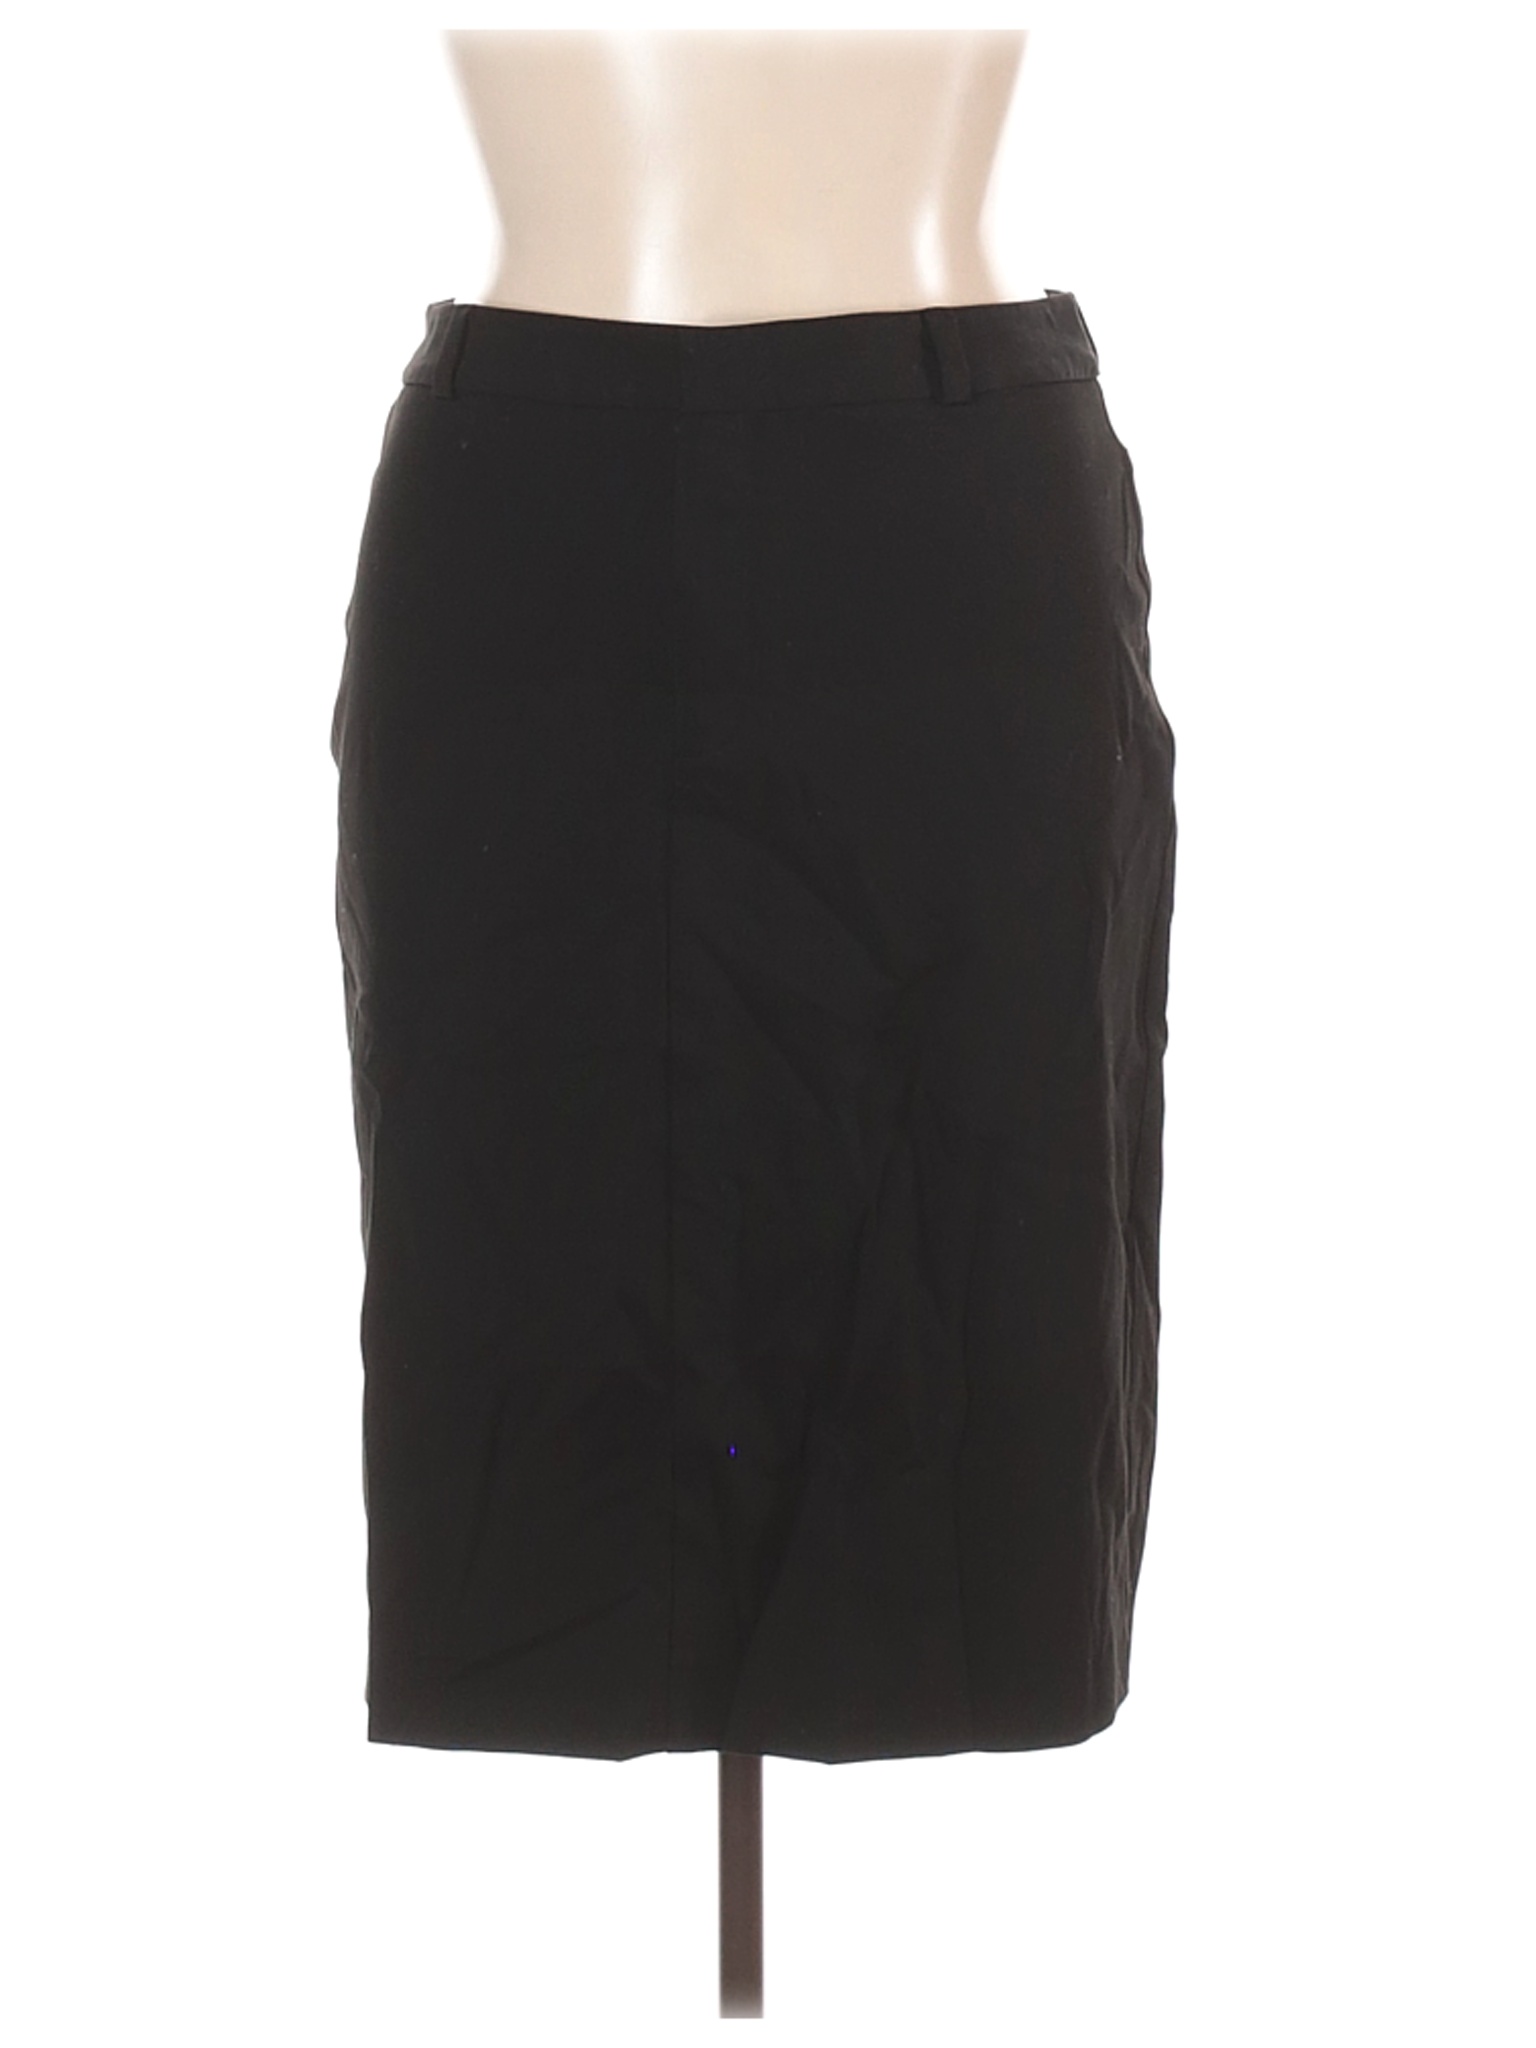 Gap Women Black Casual Skirt 16 | eBay